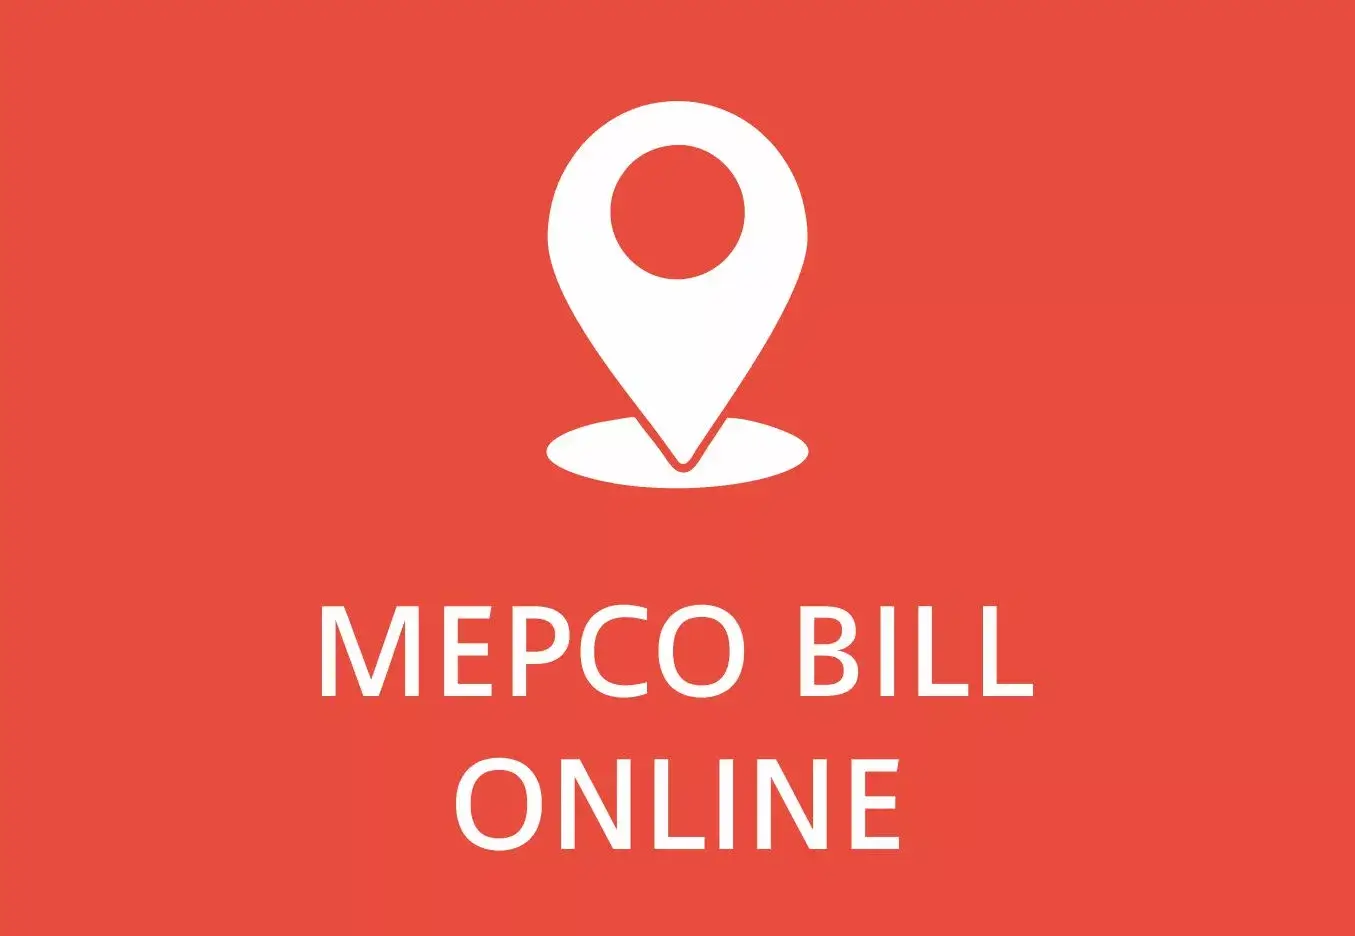 MEPCO Bill